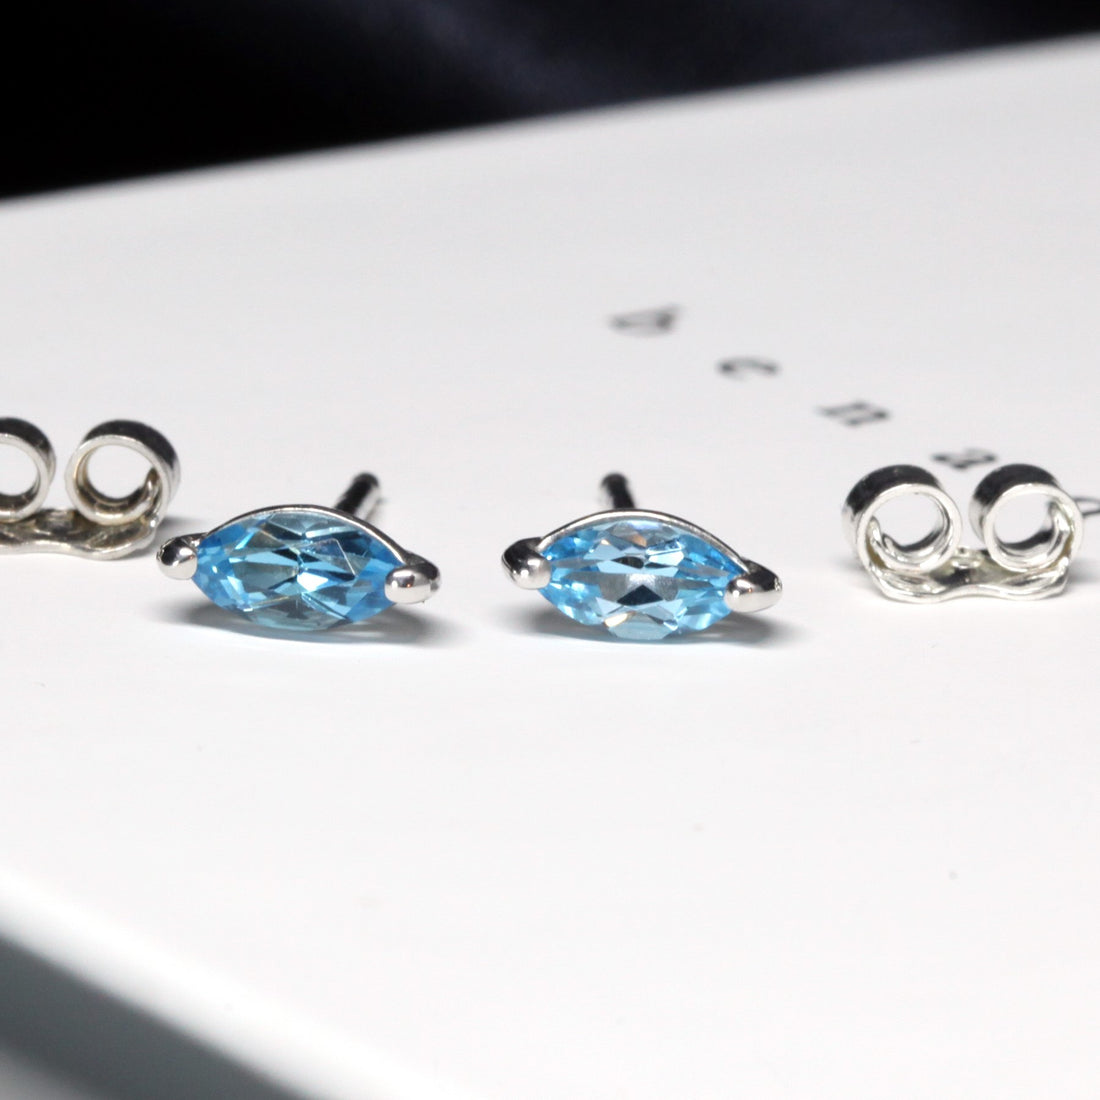 Gemstone stud earrings sterling silver marquise blue topaz